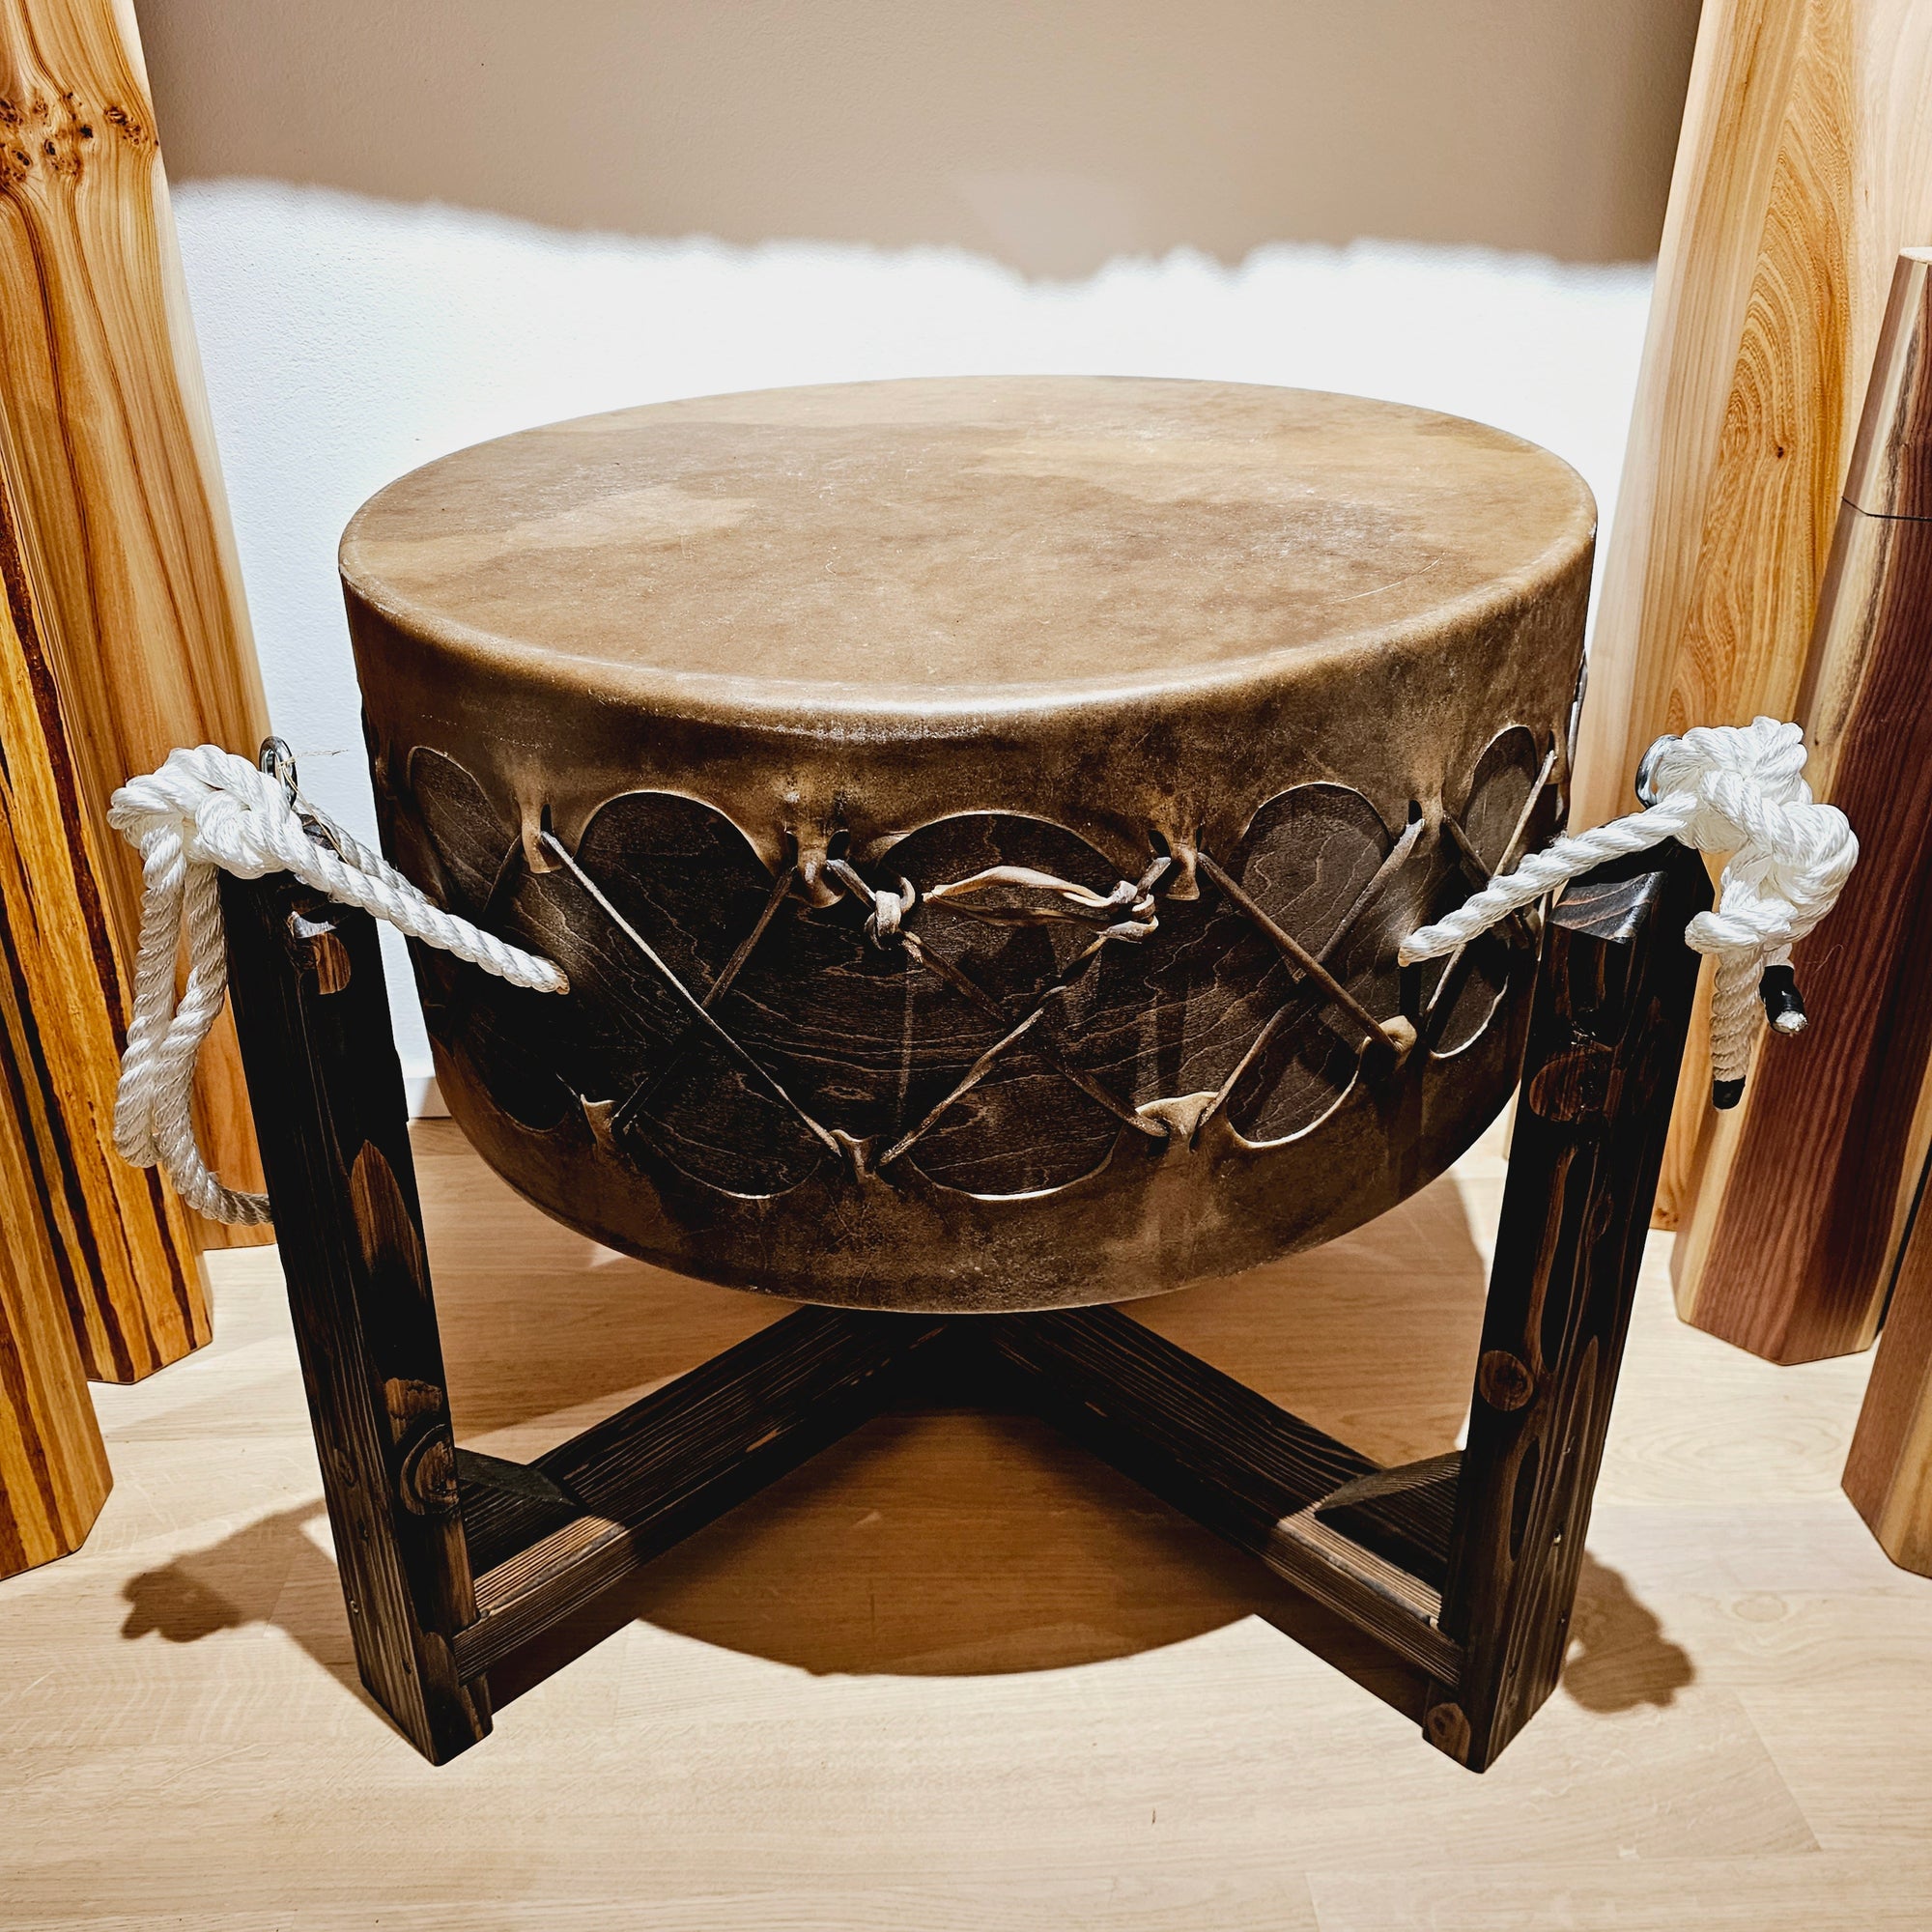 Powwow drum 65 cm - 30 cm with stand - cow